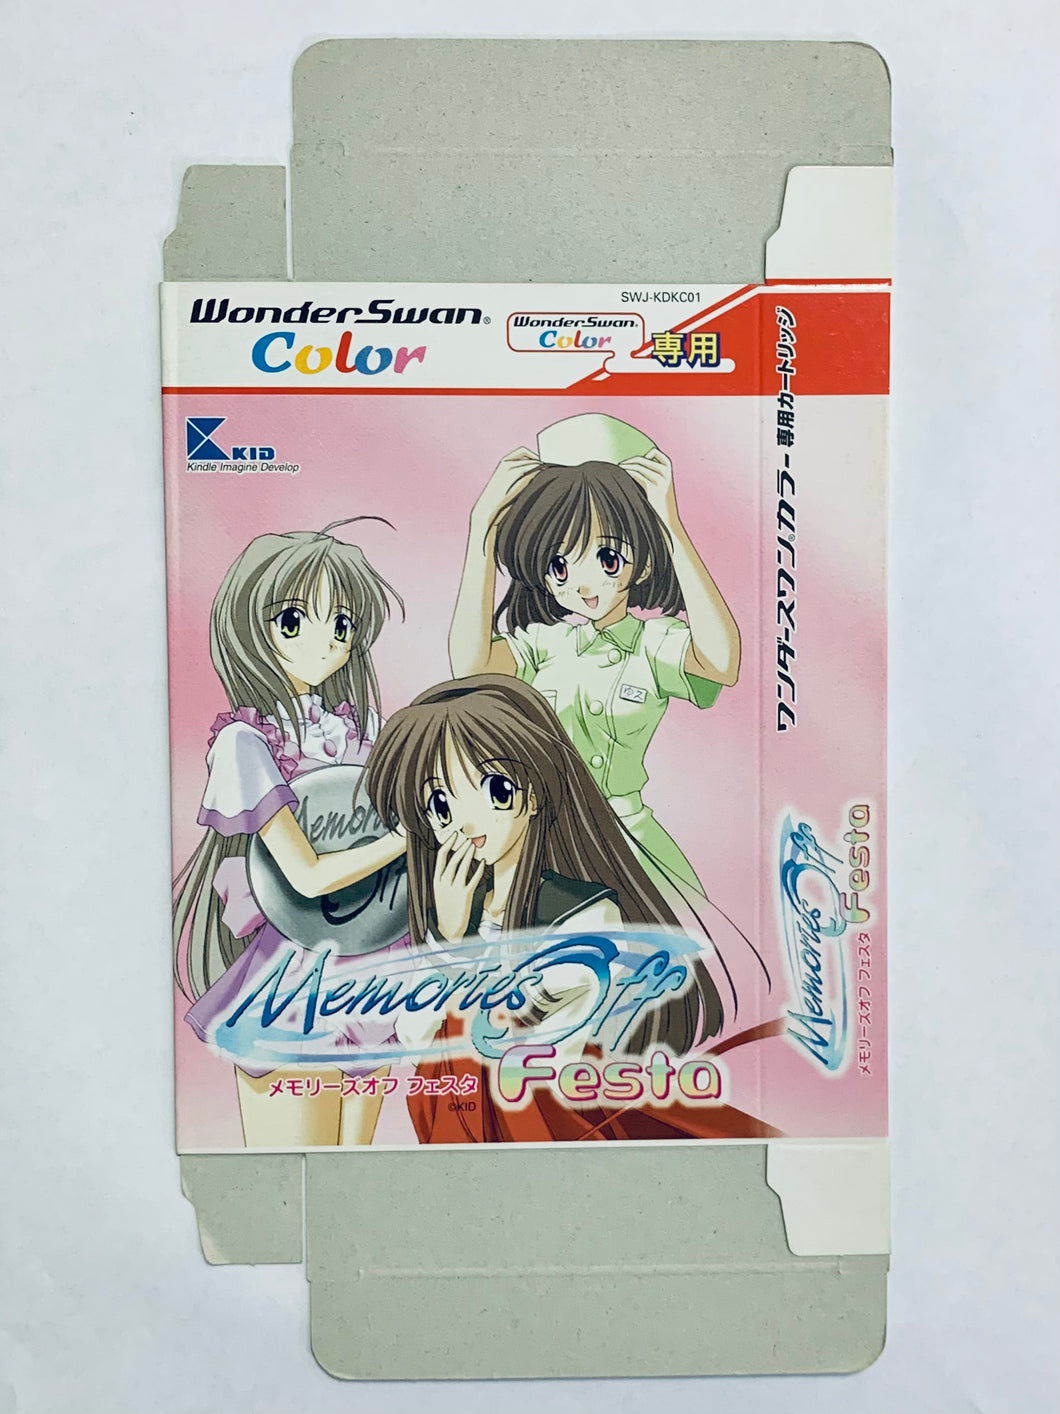 Memories Off Festa - WonderSwan Color - WSC - JP - Box Only (SWJ-KDKC01)